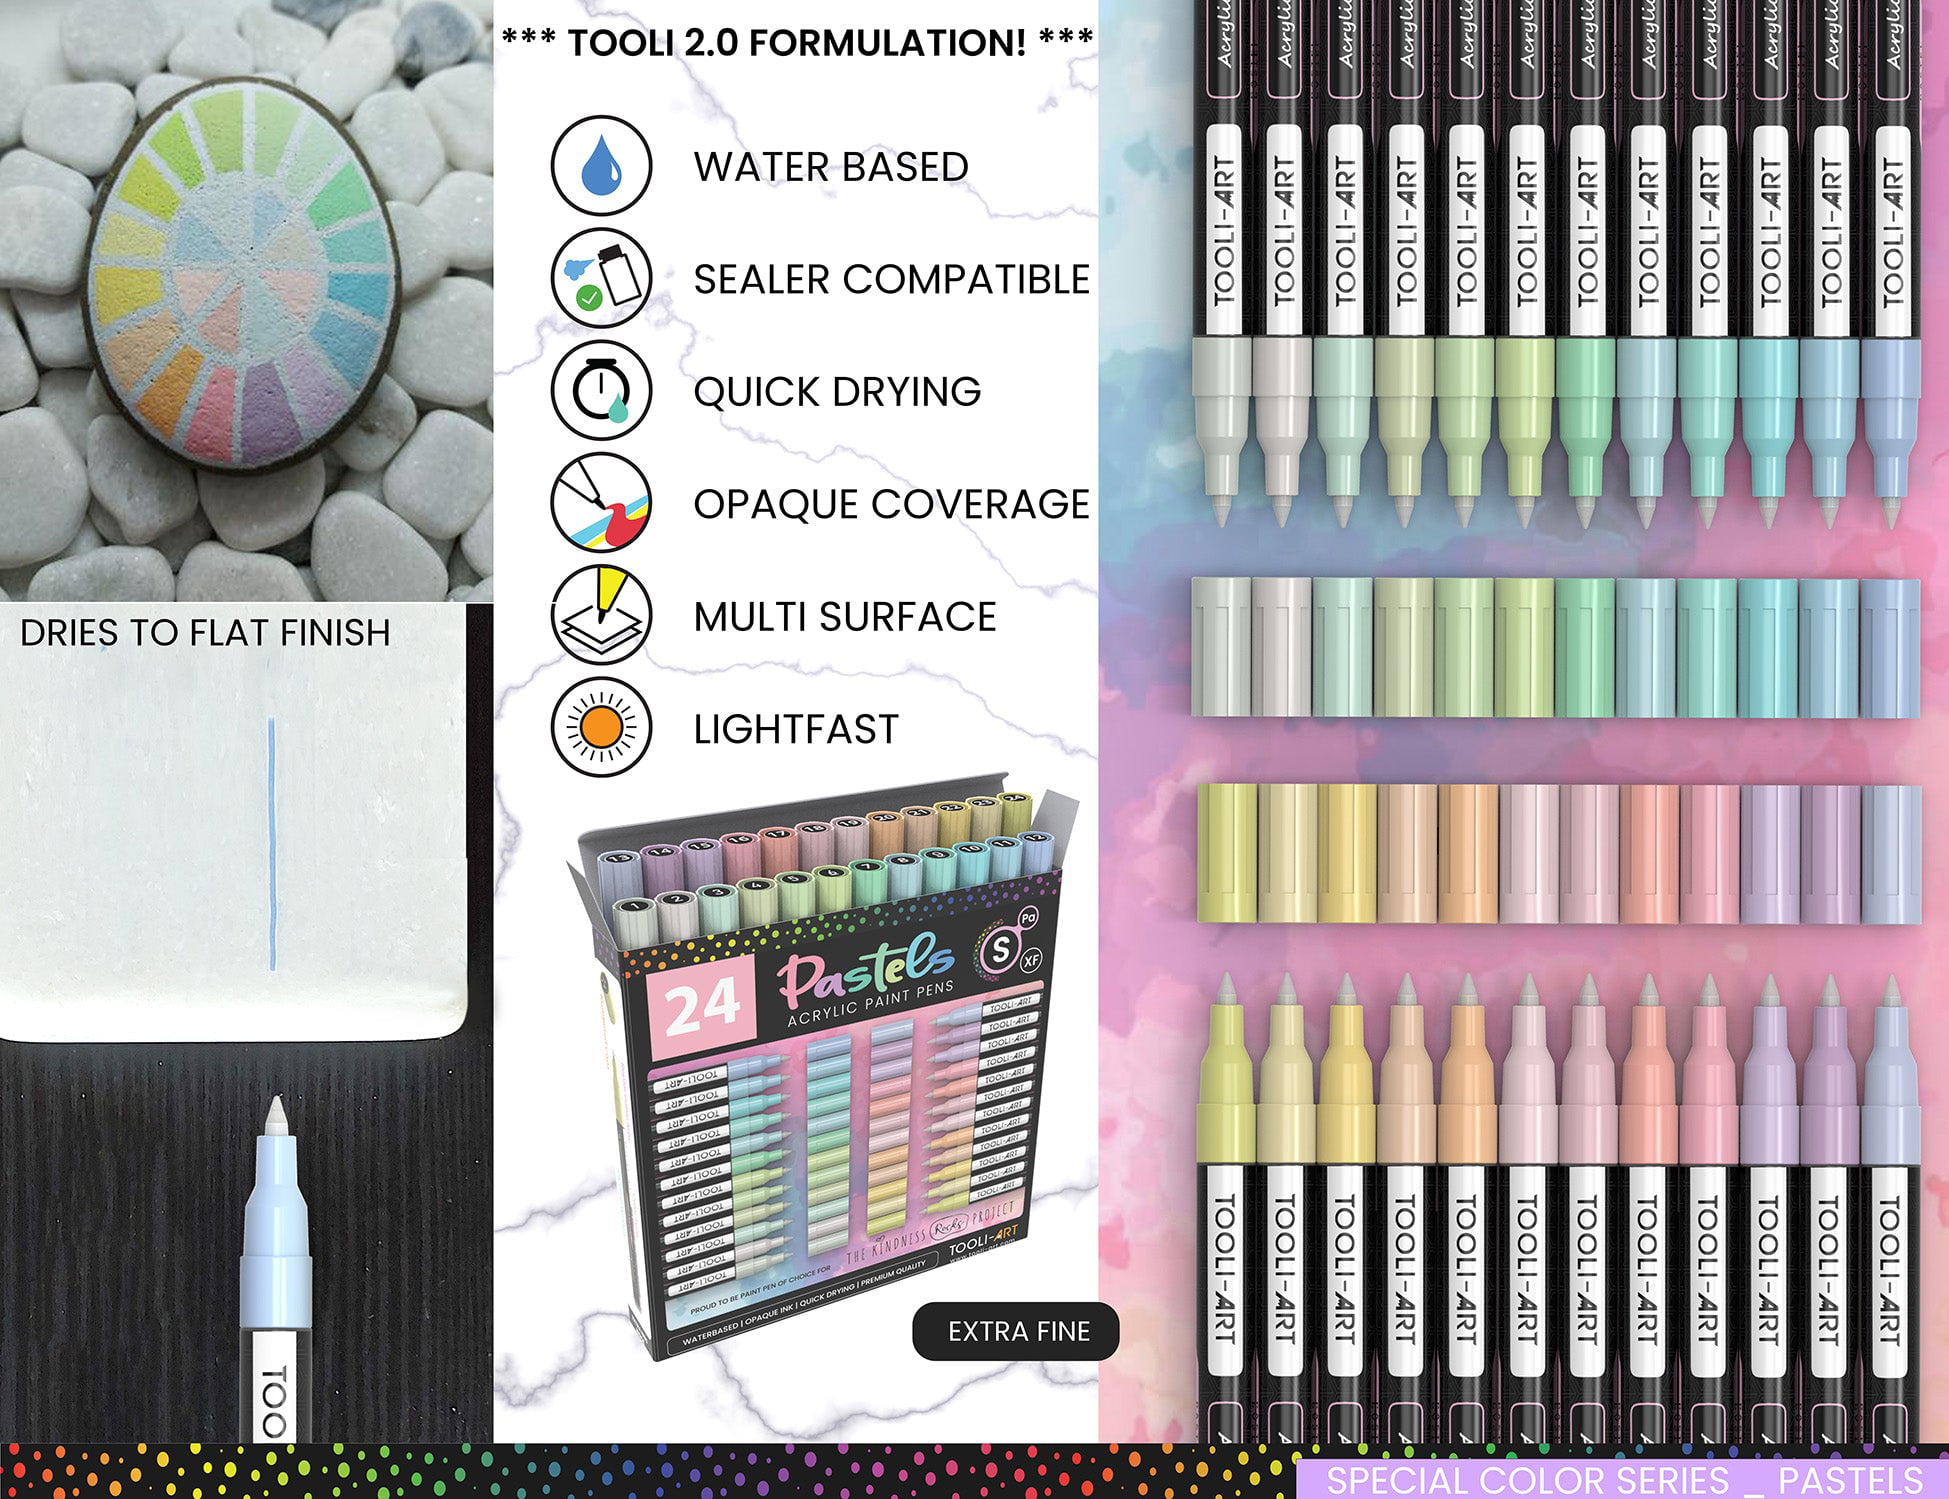 12/24/36pcs Color Acrylic Marker Art Pen Set Extra Fine / Circular Dot Tip  for Shoes Ceramic Drawing Paint School F7288